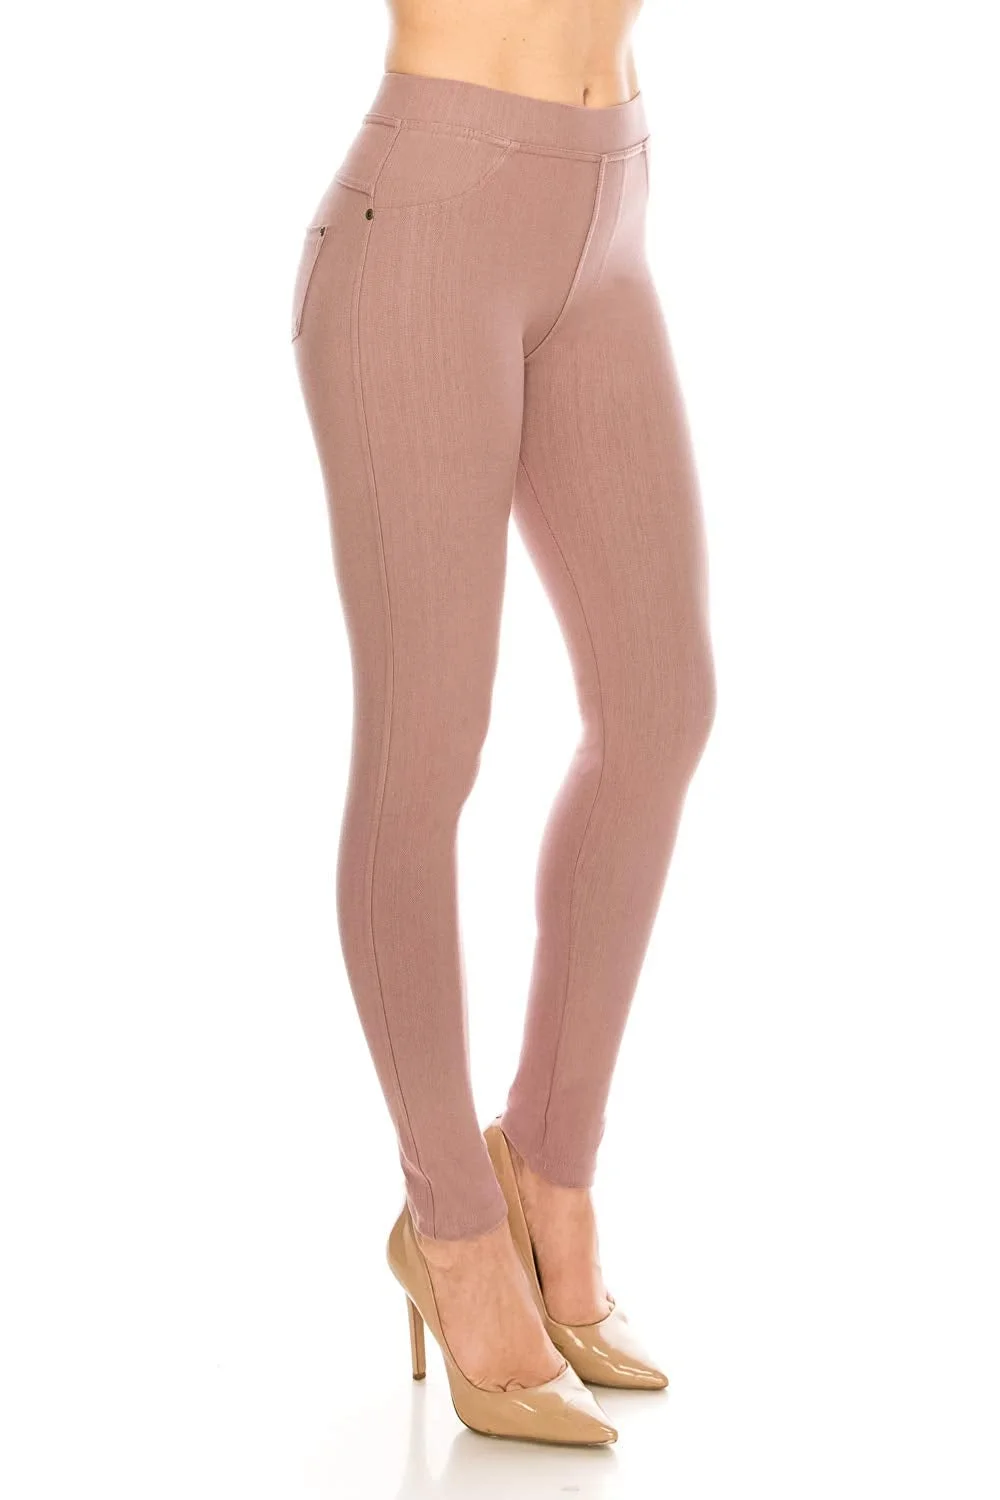 Pocket Jeggings Pants Leggings - Women Comfy Slim Fit Denim Jeans Skinny Stretch Regular Plus Size